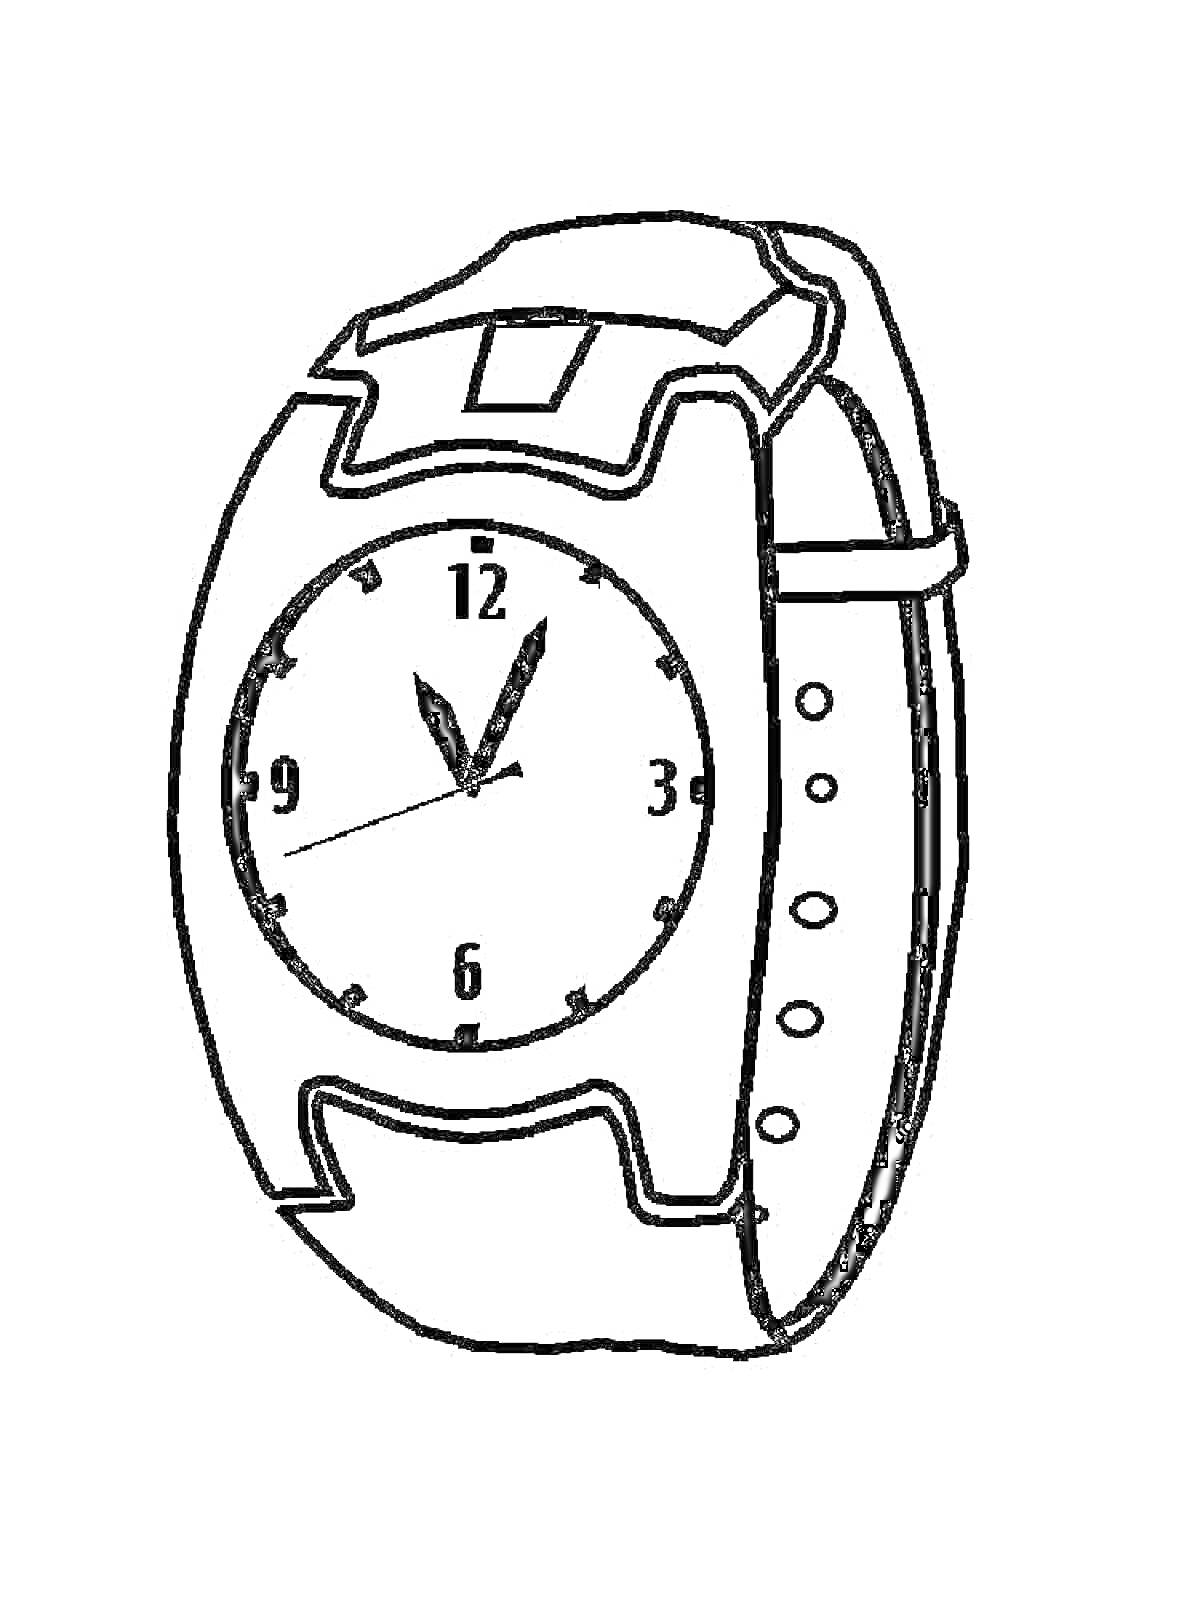 Раскраска Наручные часы с ремешком и цифрами на циферблате